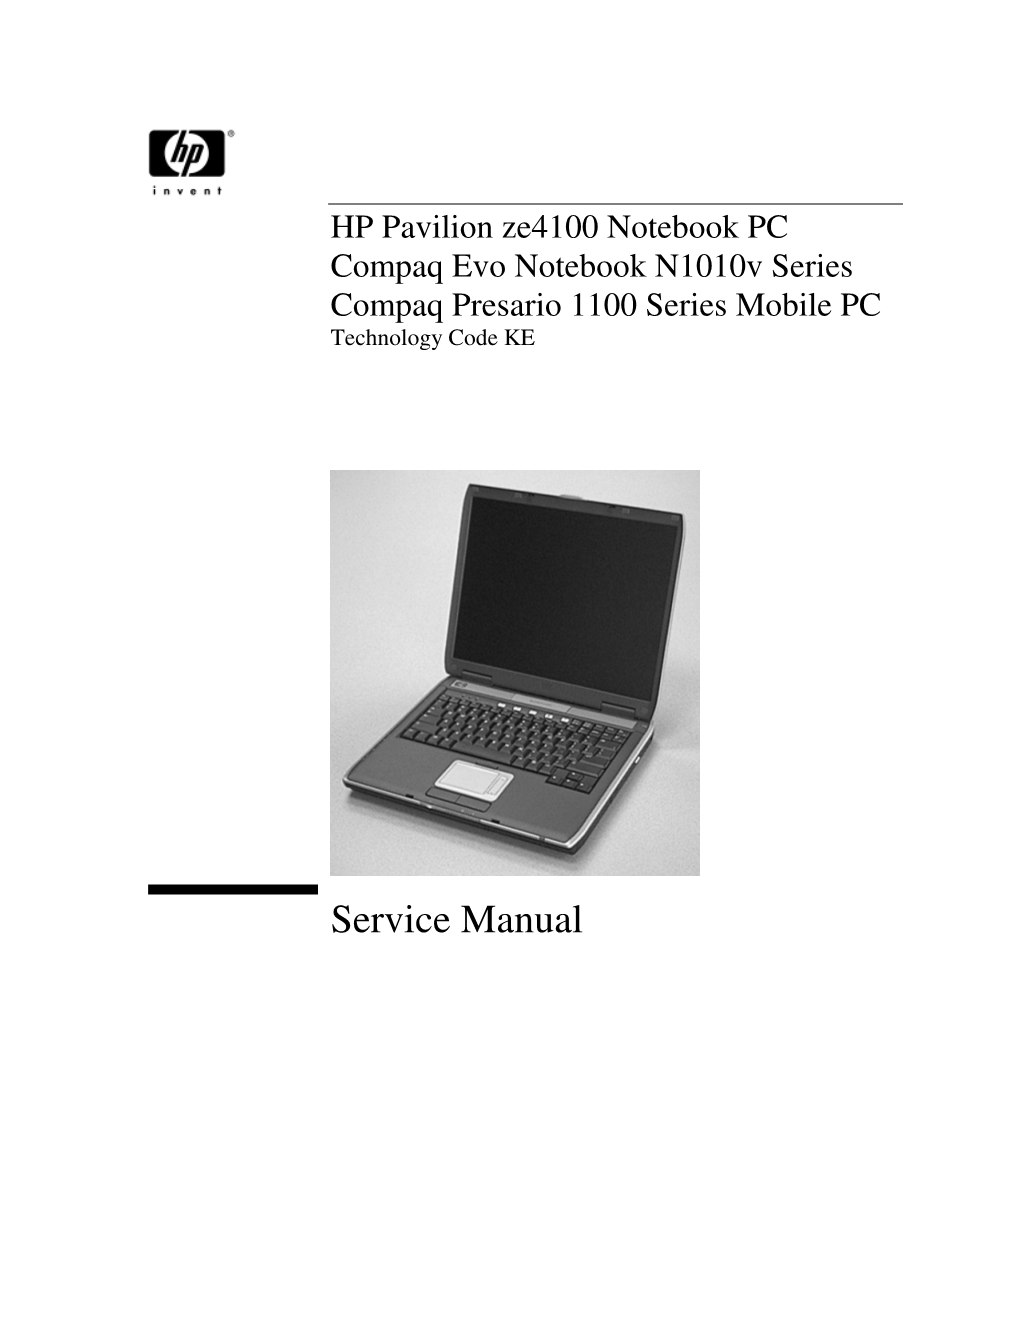 HP Pavilion Ze4100 Notebook PC / Compaq Evo Notebook N1010v